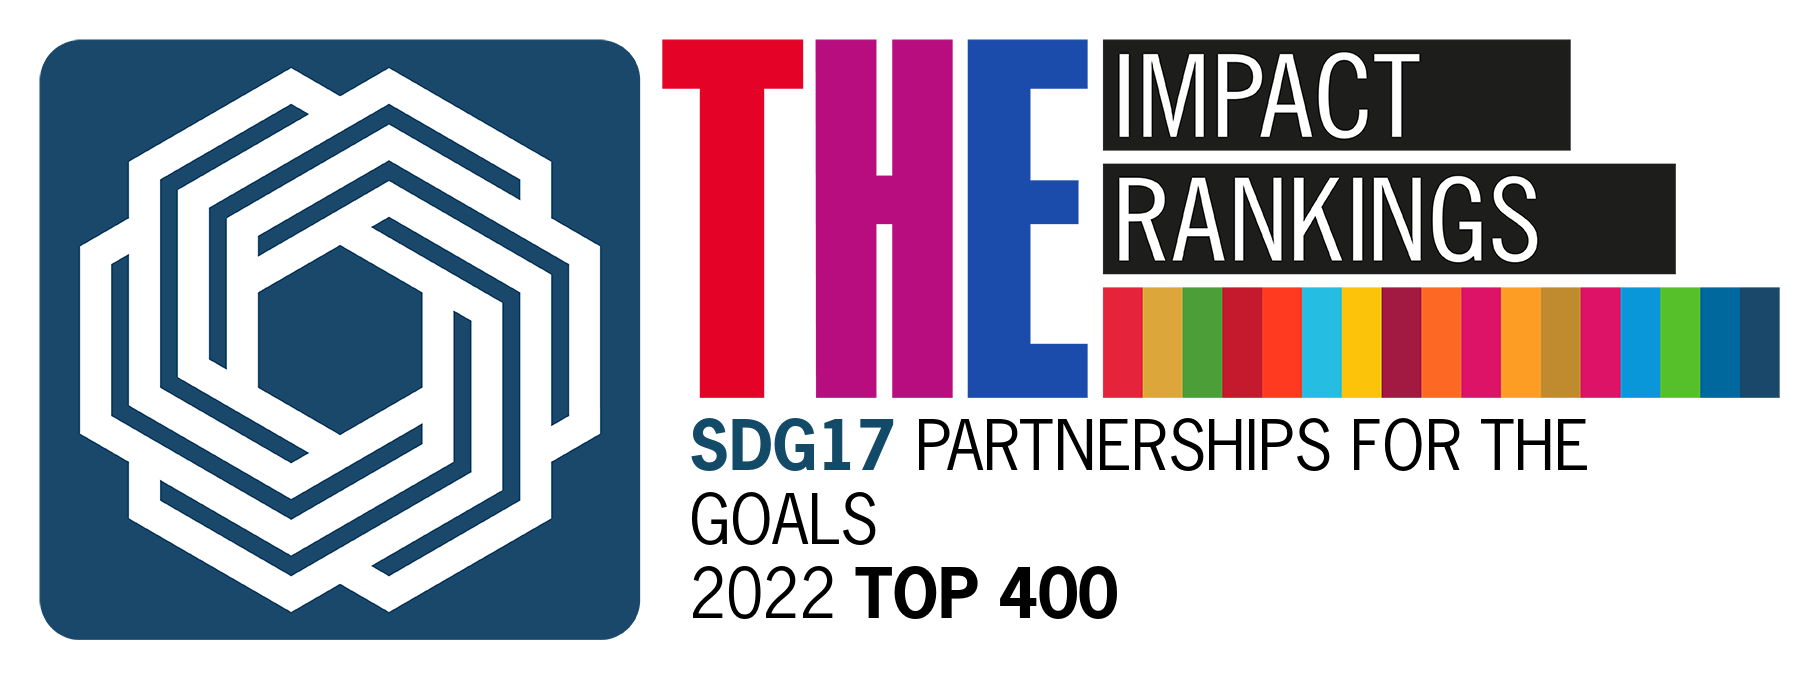 SDG17_ Partnerships for the Goals - Top 400